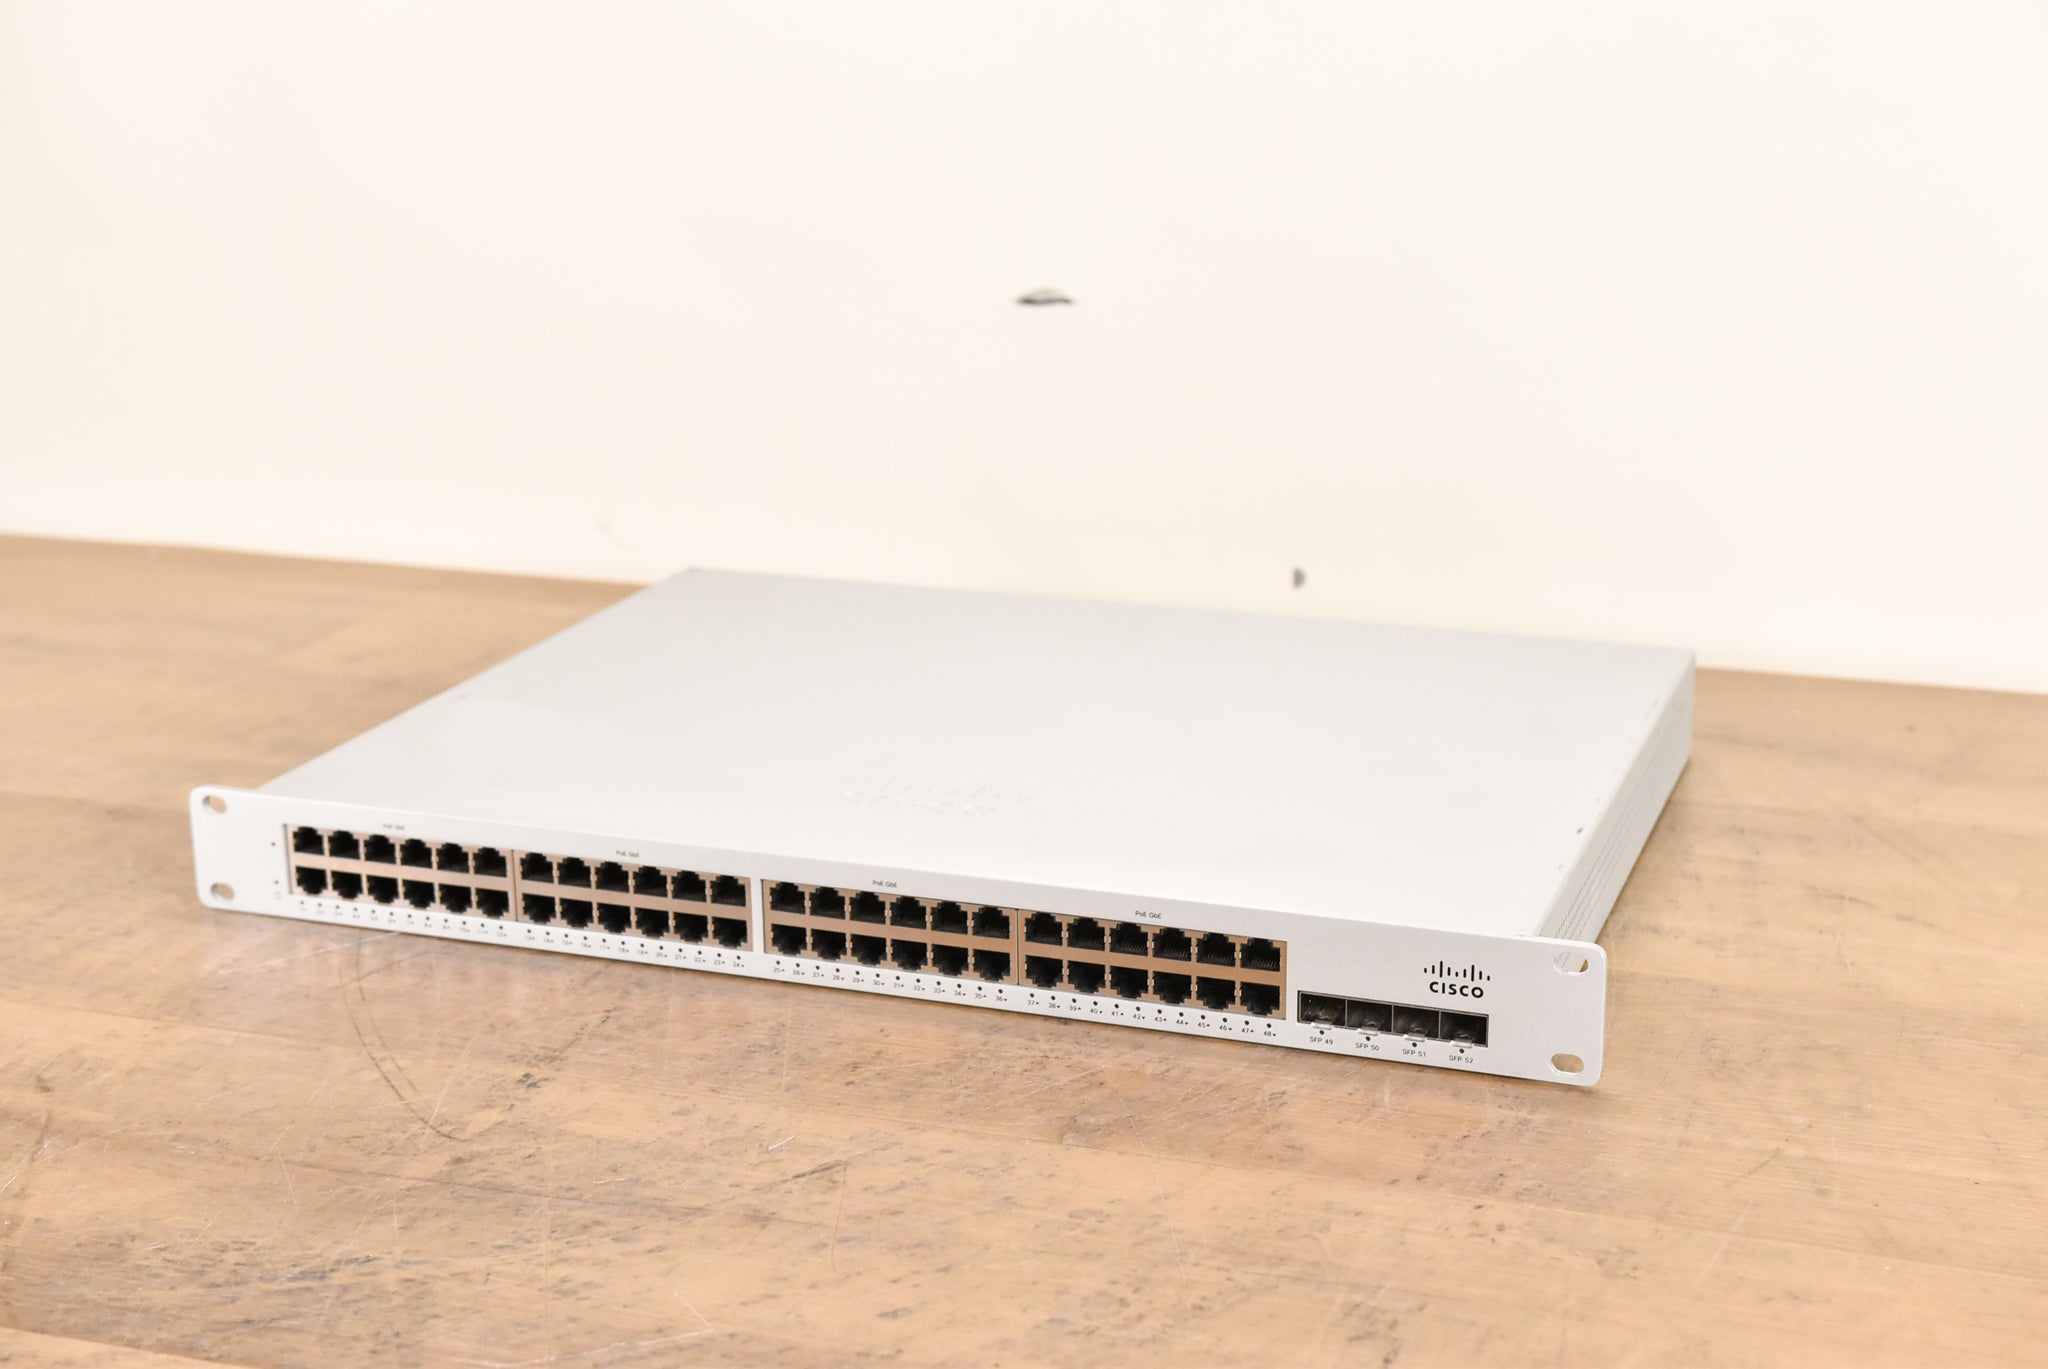 Cisco Meraki MS210-48LP 48-Port Gigabit Cloud-Managed Switch